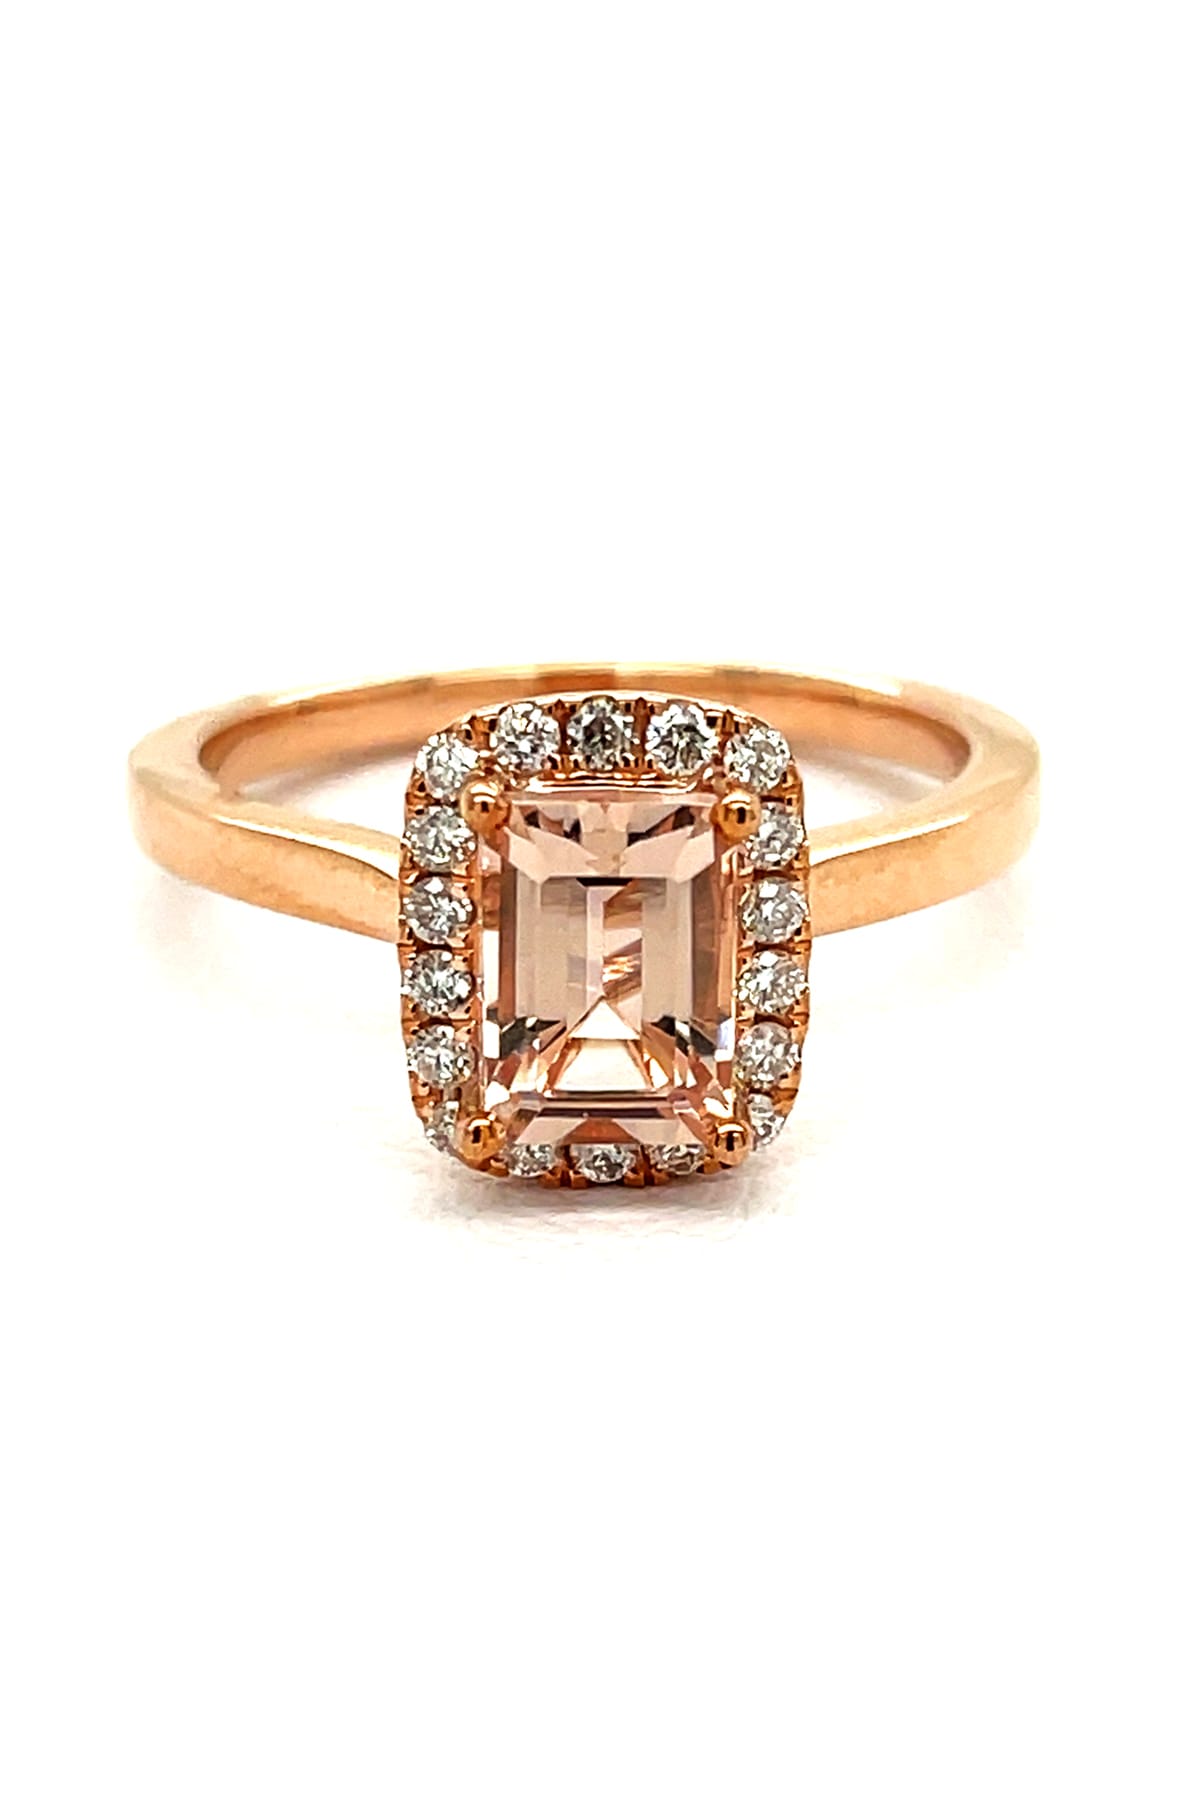 Emerald Cut Morganite And Diamond Halo Ring available at LeGassick Diamonds and Jewellery Gold Coast, Australia.